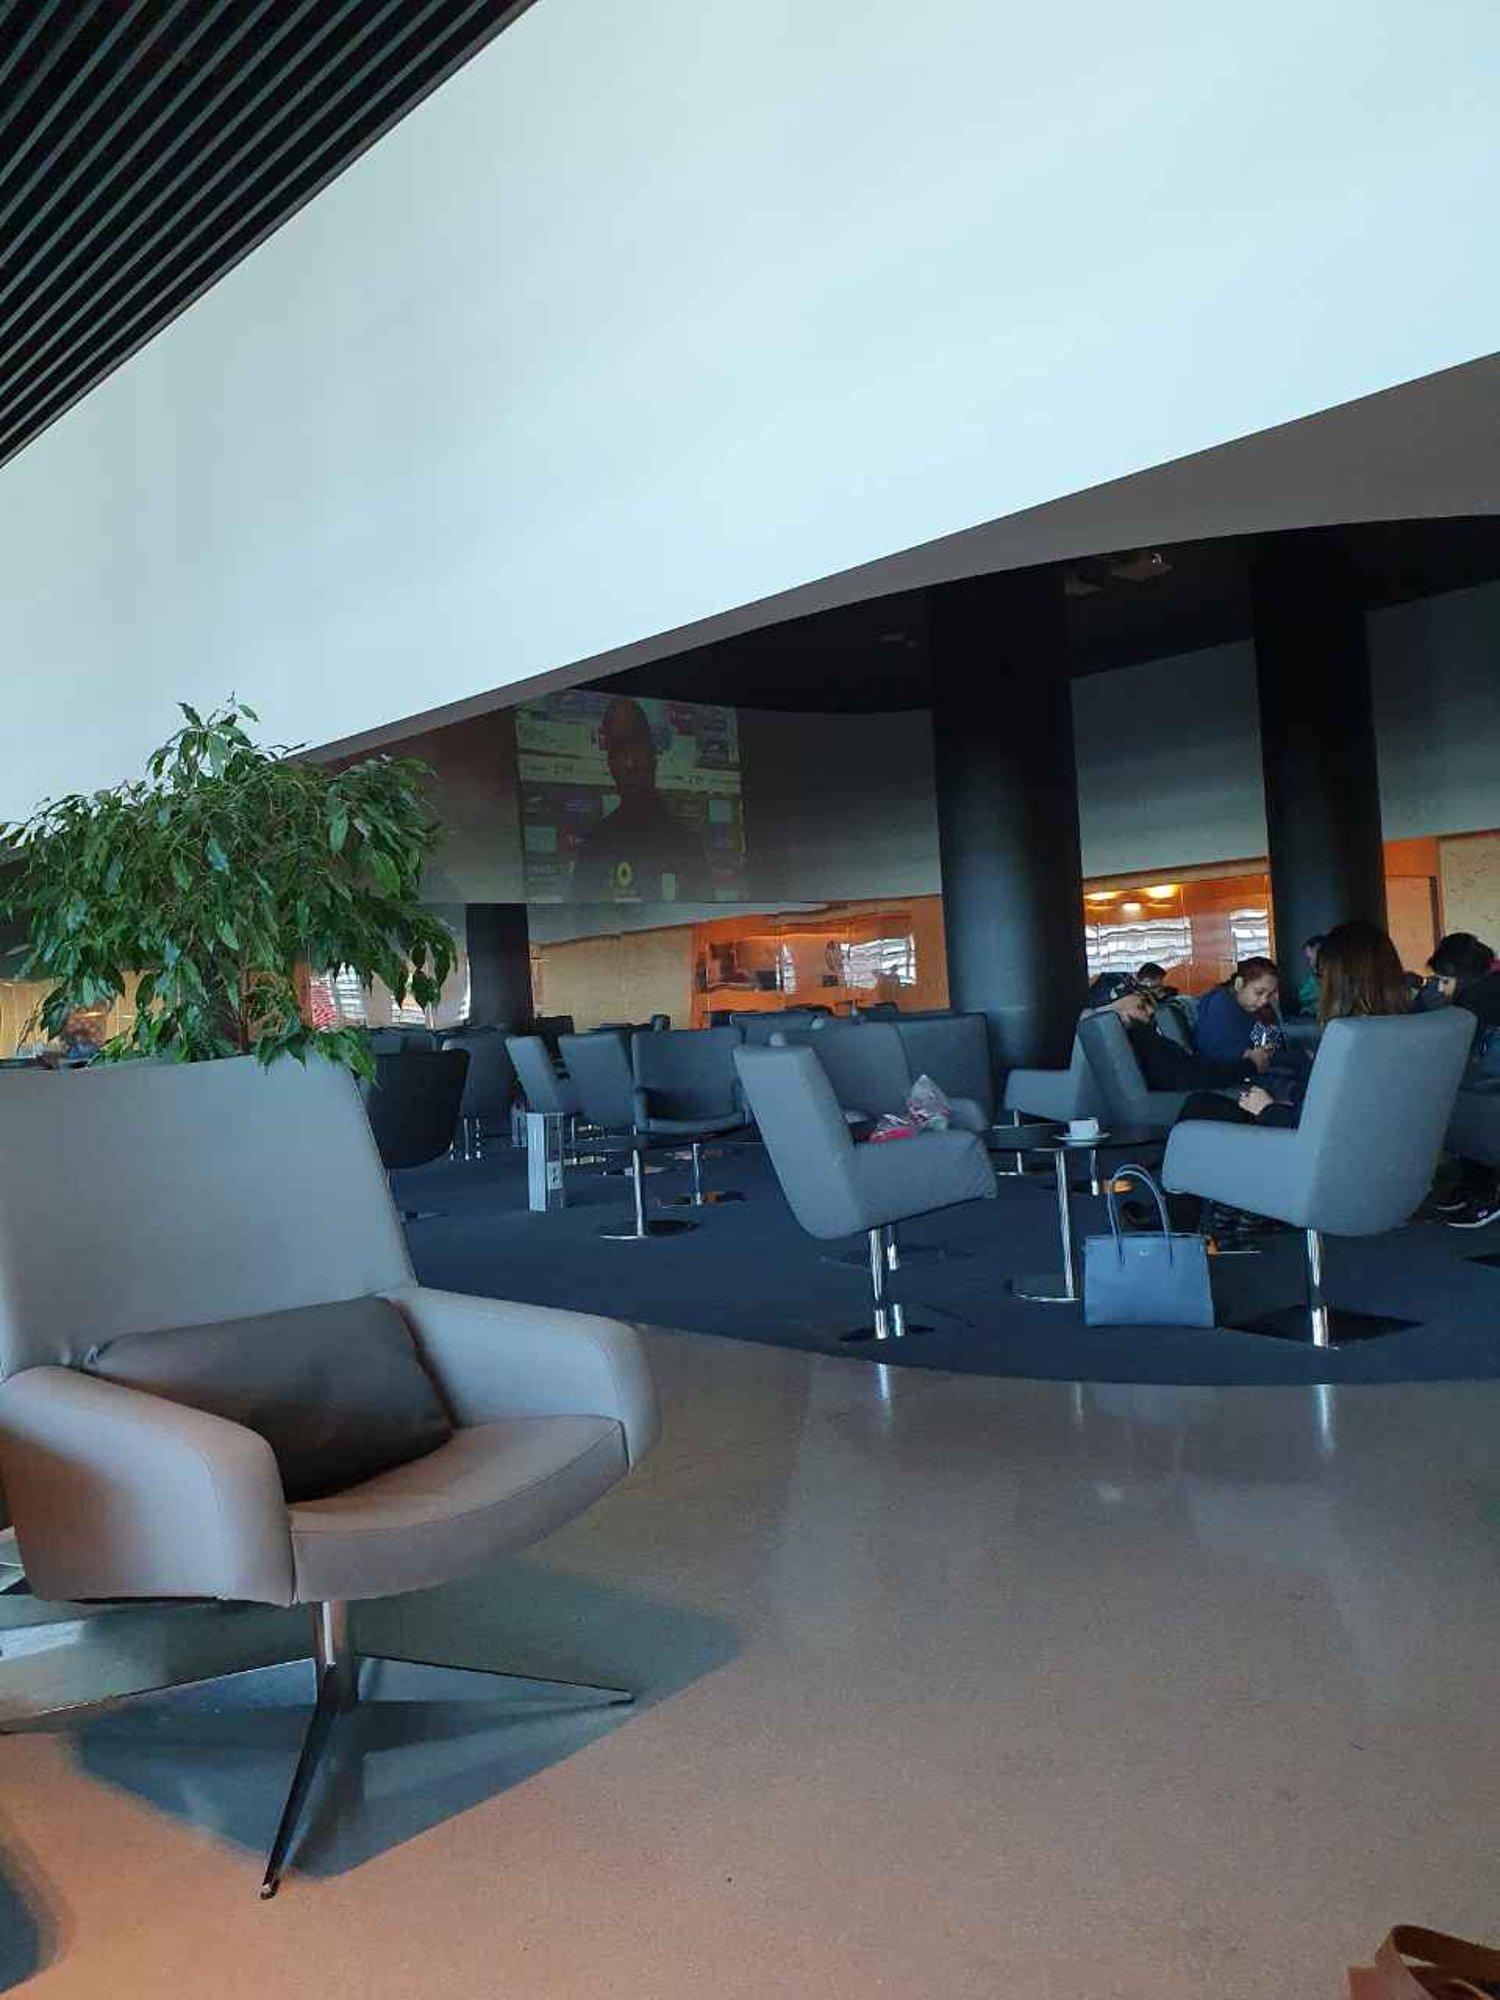 ANA Airport Lounge image 20 of 49